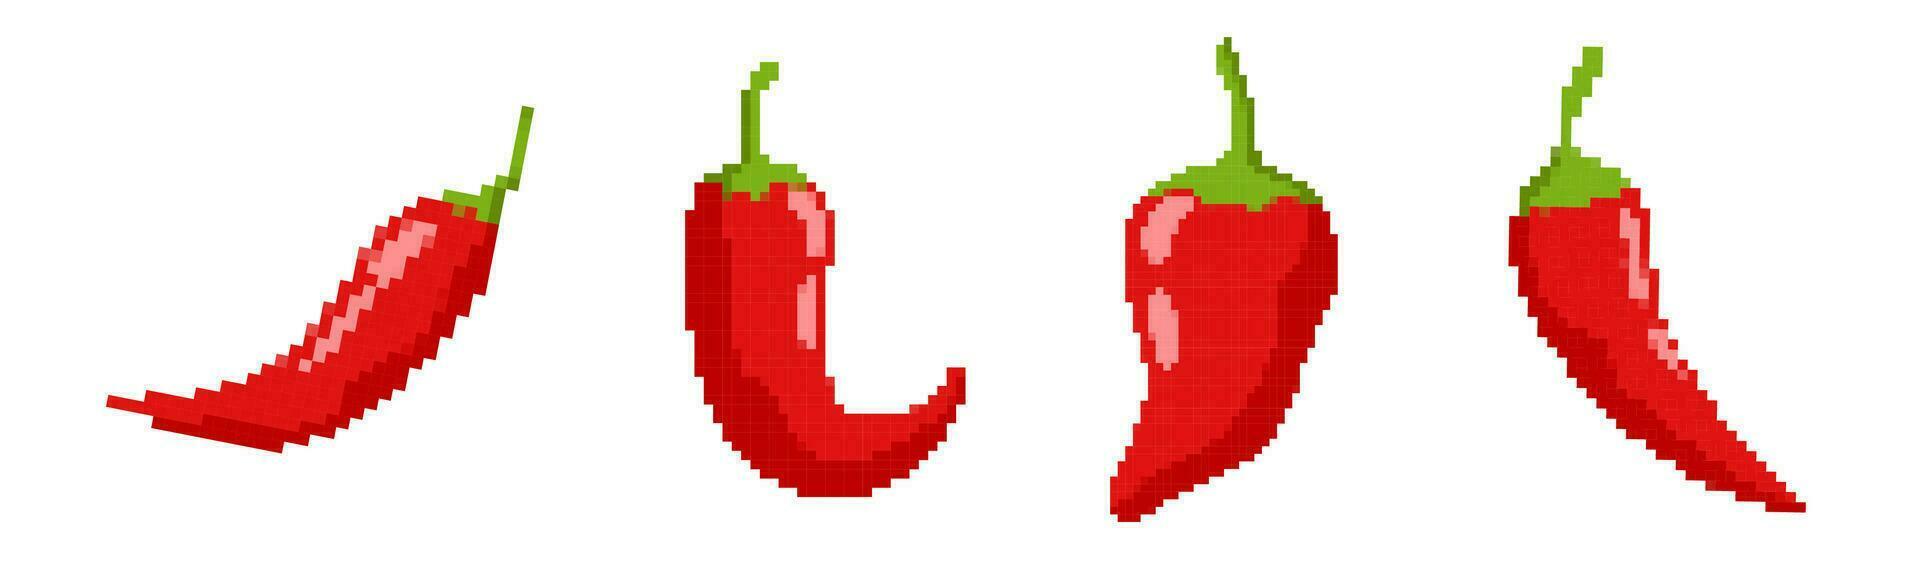 Pixel art hot chili pepper. 8 bit chile spicy paper vector